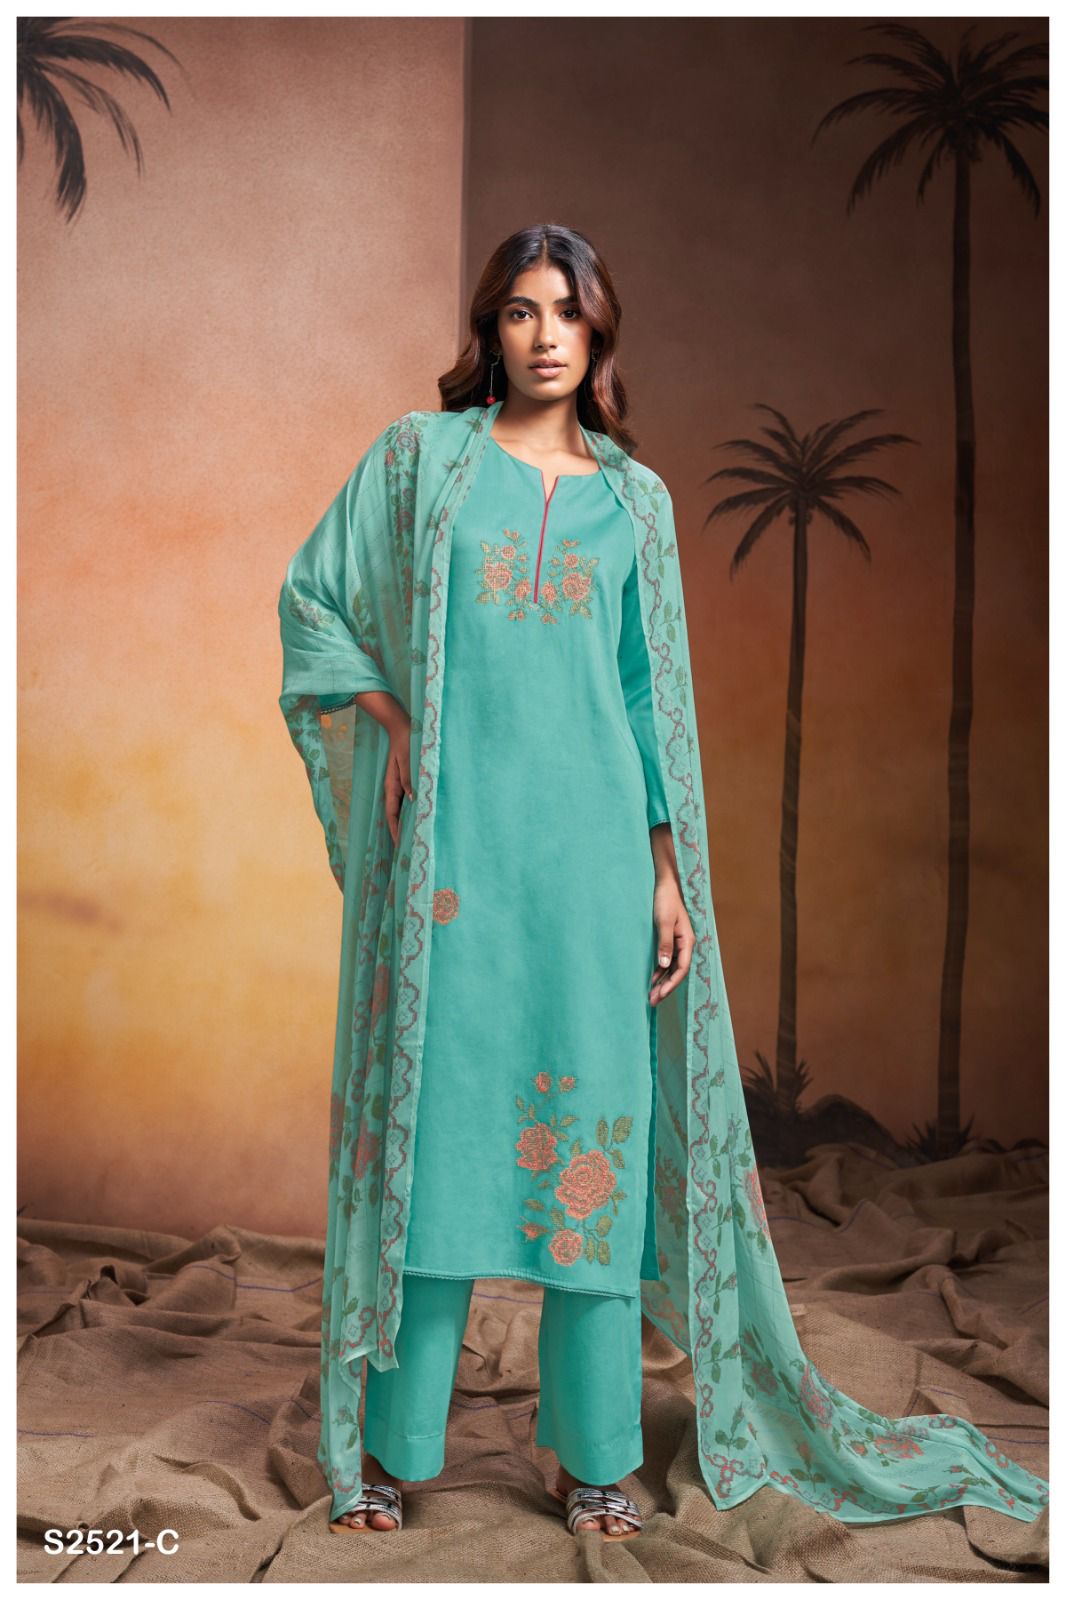 Mylah 2521 Ganga Cotton Satin Plazzo Style Suits Manufacturer India